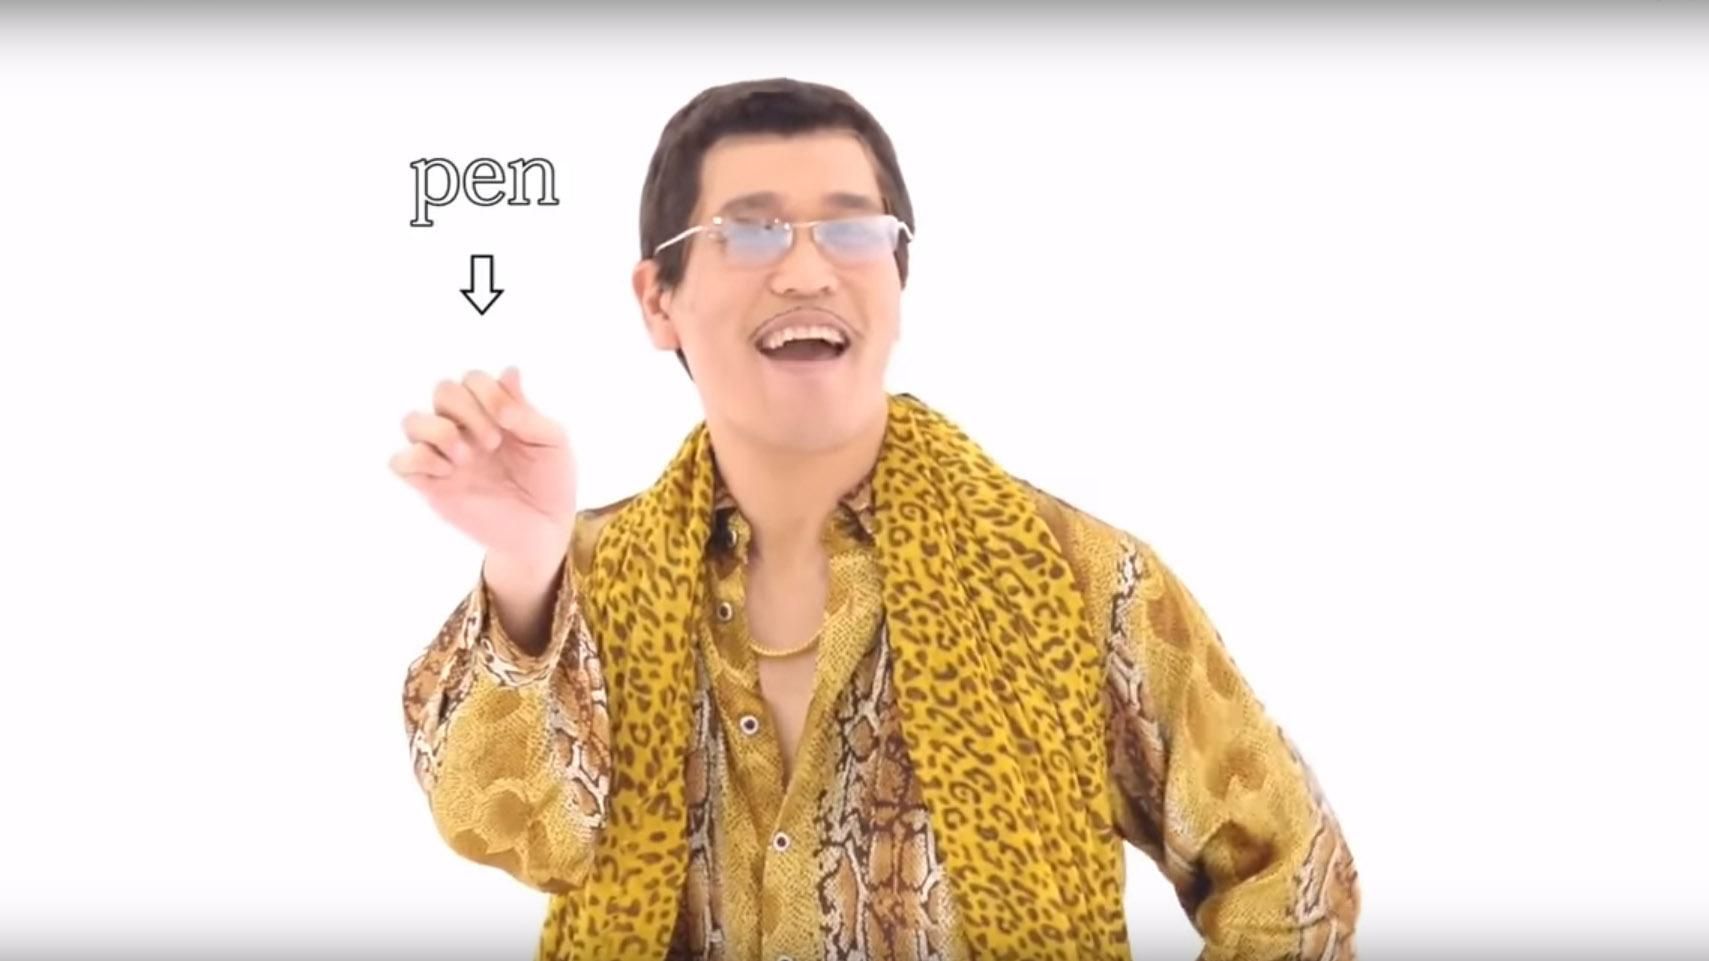 Pen-Pineapple-Apple-Pen: почему из-за усатого японца сошел с ума весь мир